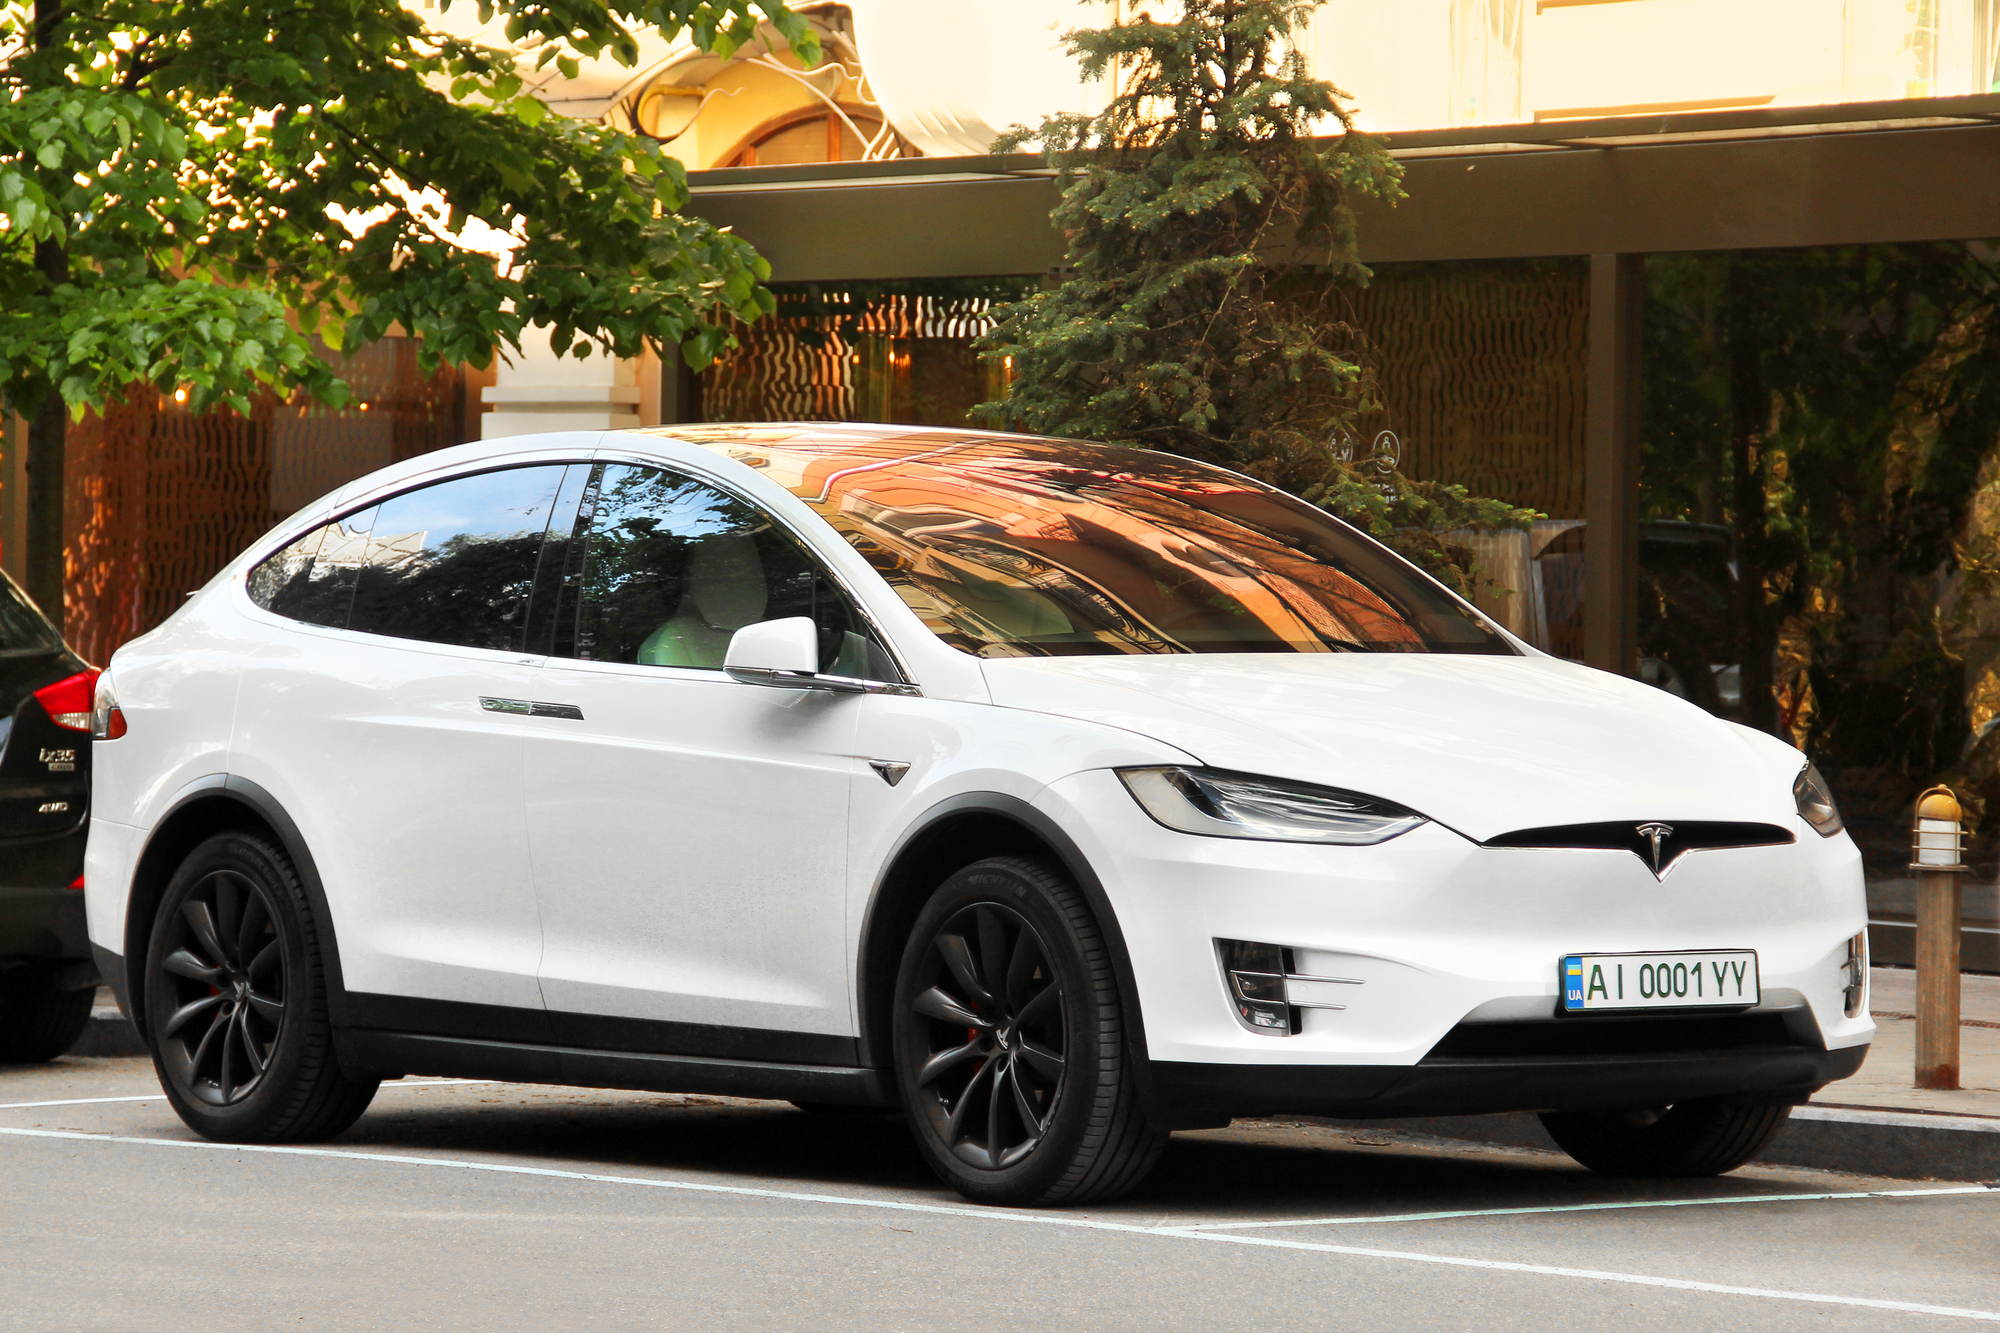 Kiev, Ukraine - May 22, 2021: Tesla Model X white electric car parked in the city